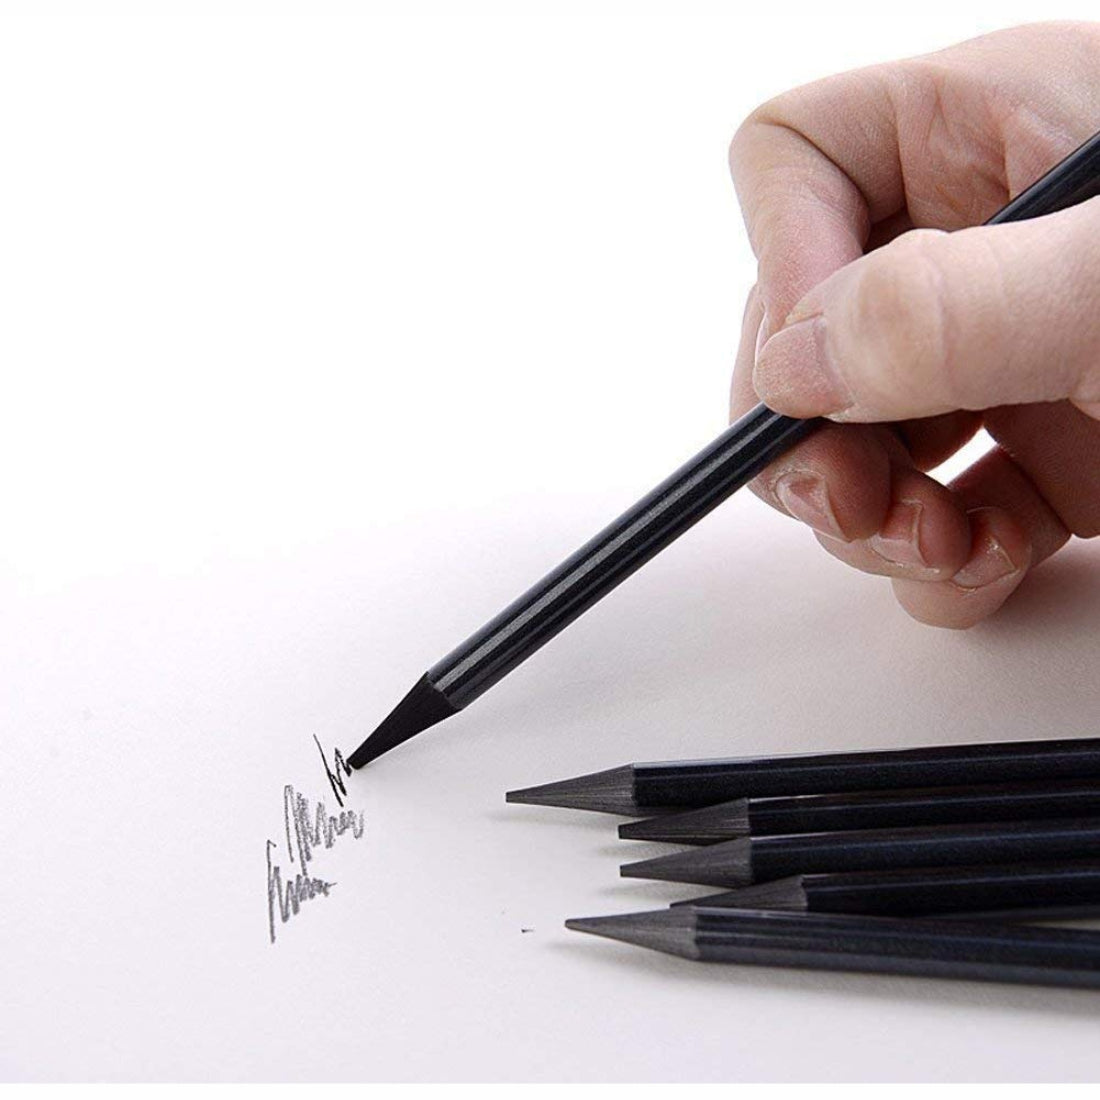 Worison Woodless Graphite Pencils - Set of 6